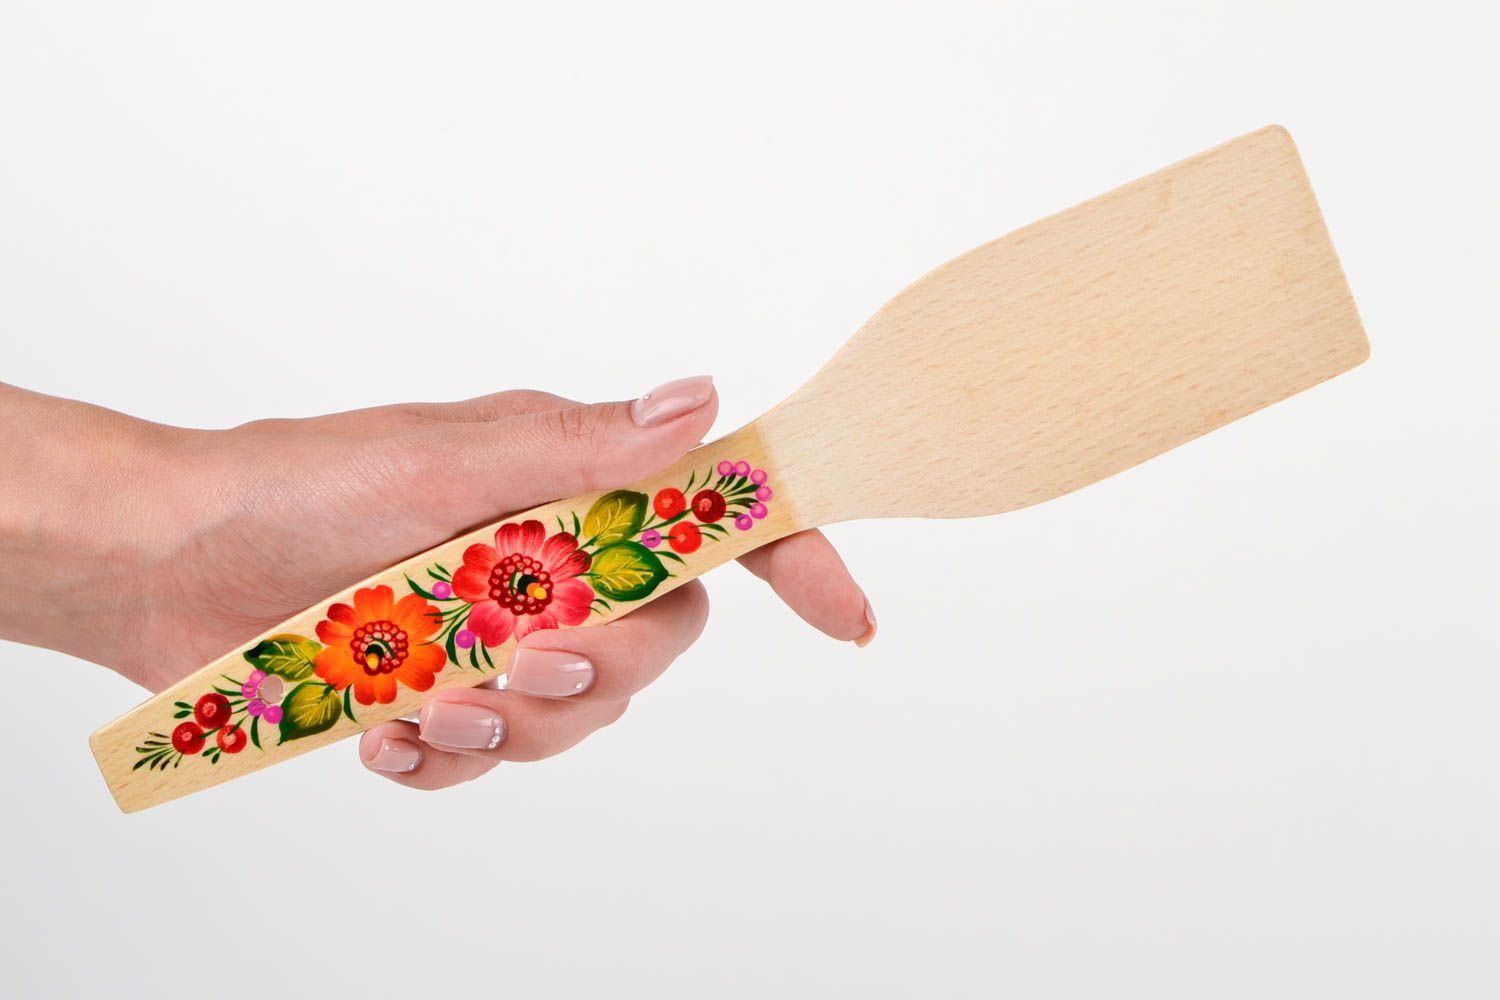 Beautiful handmade wooden spatula kitchen supplies decorative spatula gift ideas photo 2